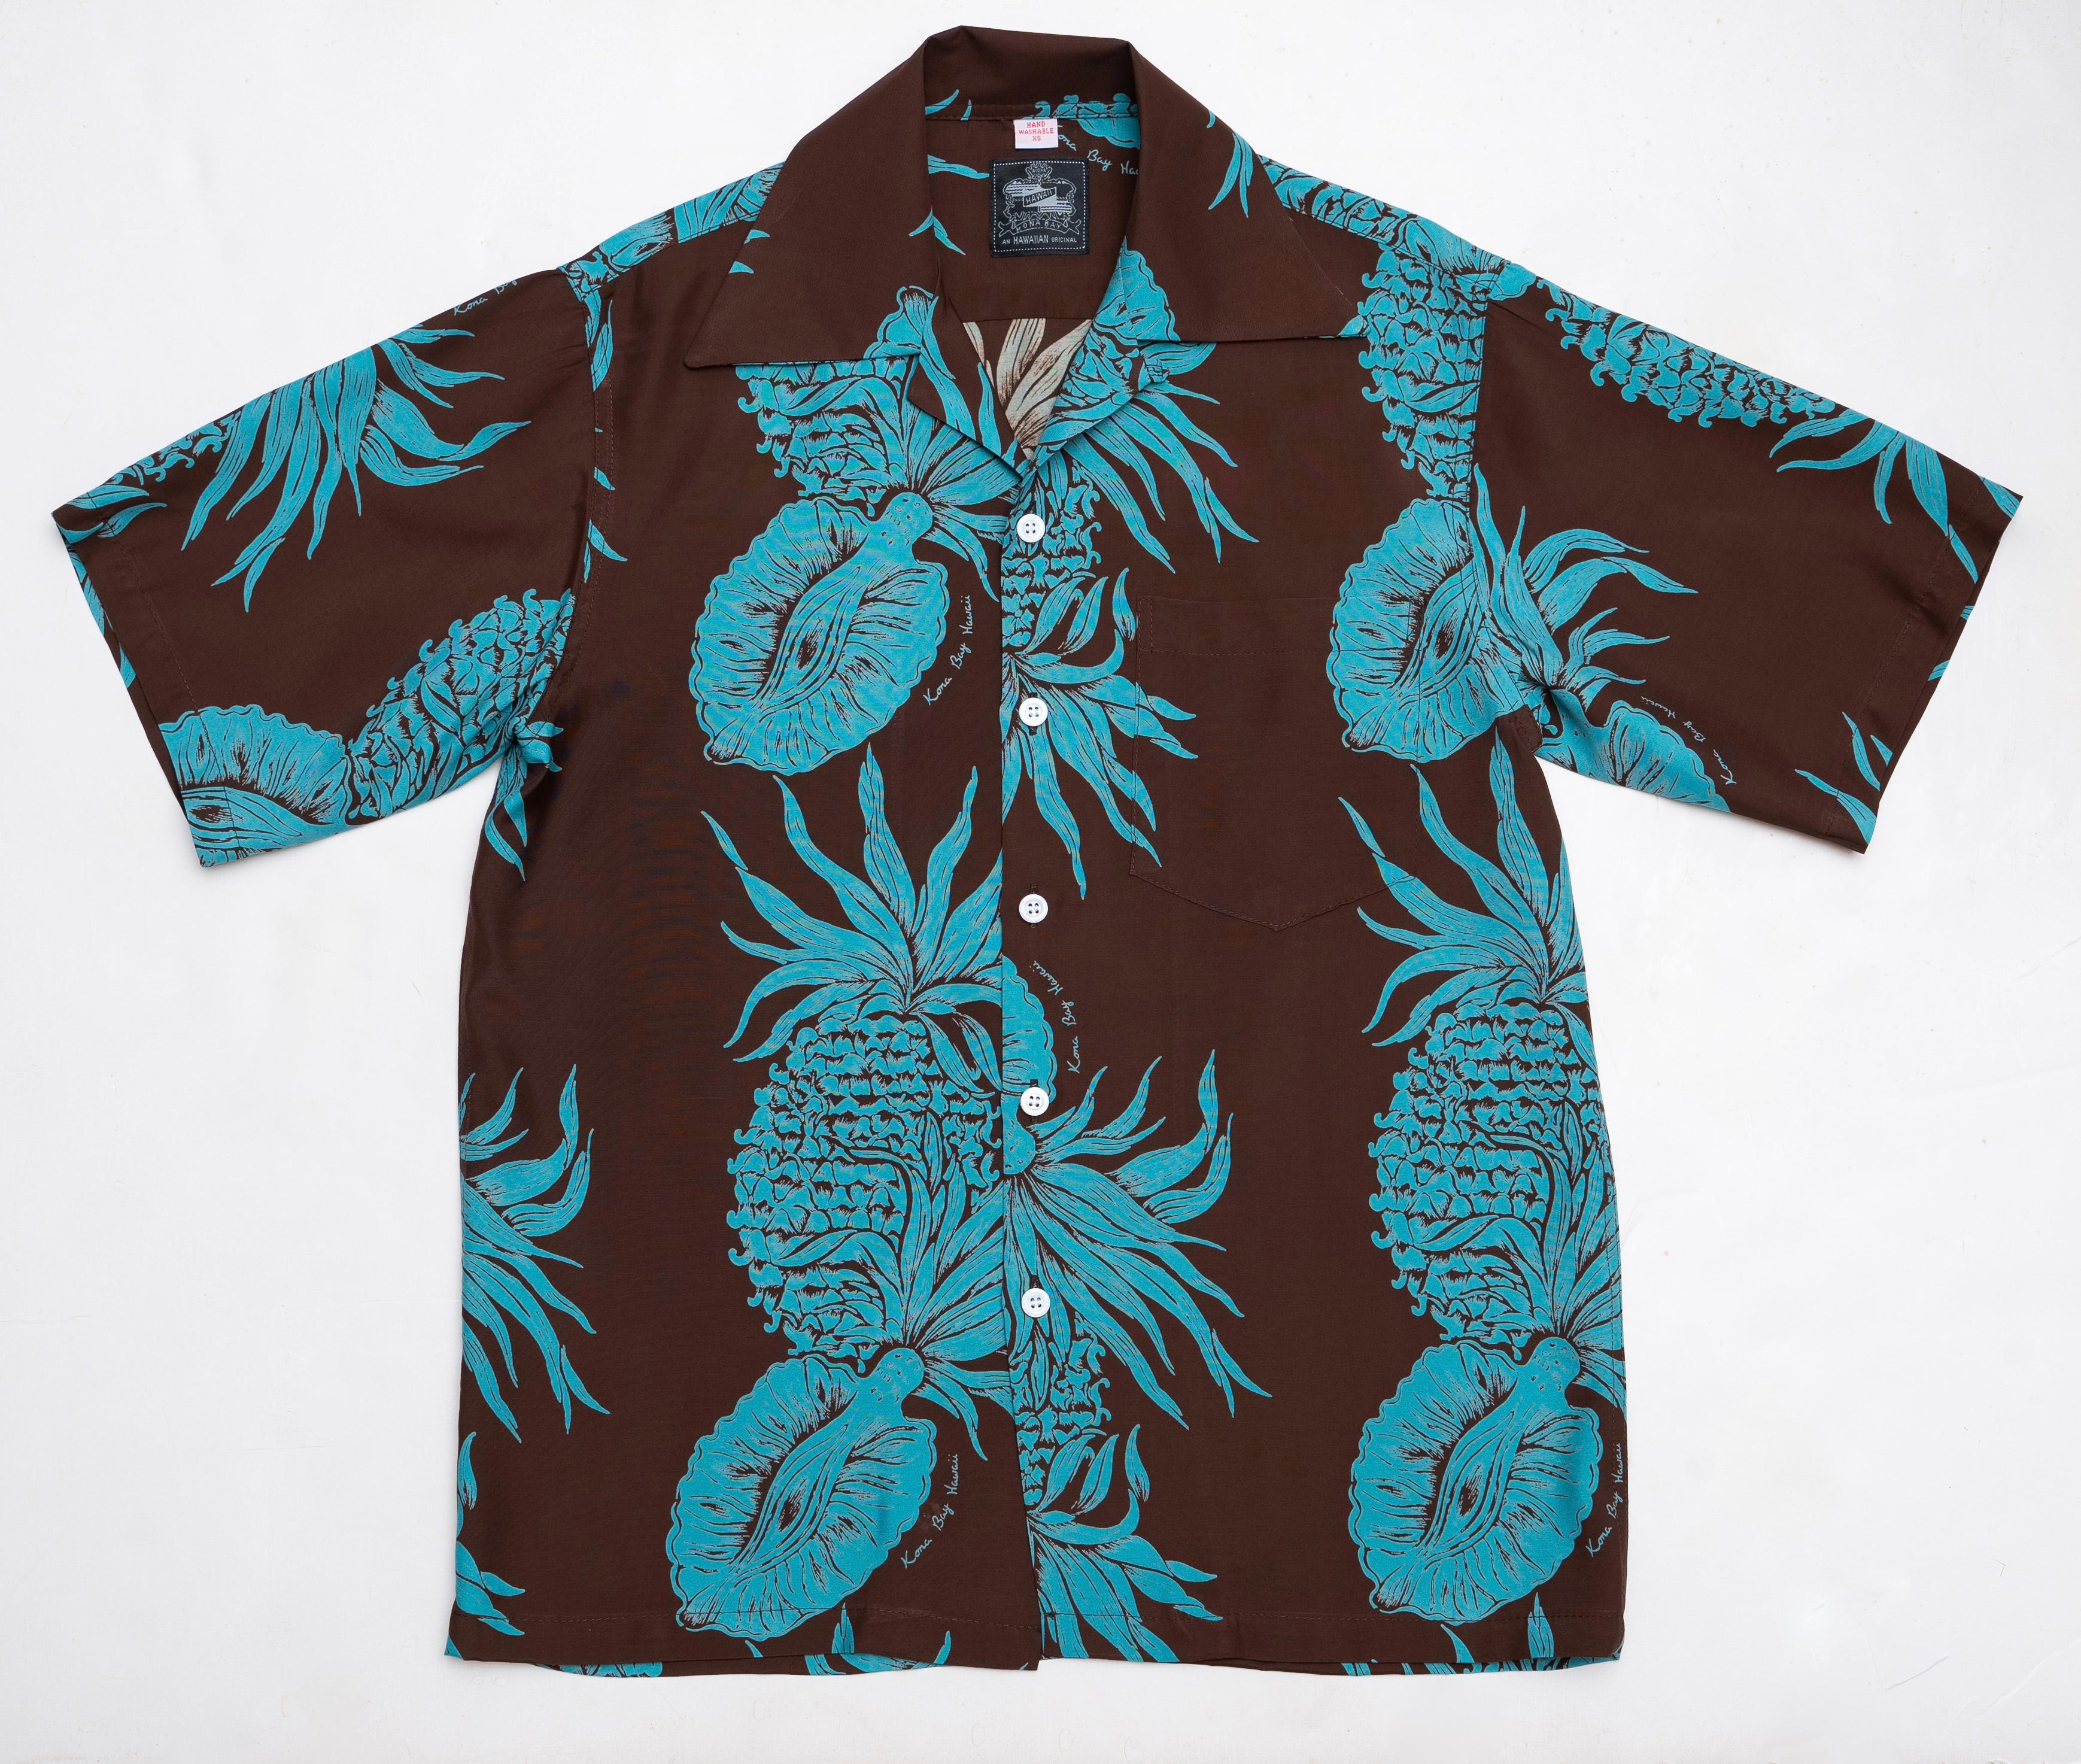 Kona Bay Hawaii - Authentic Aloha Shirts, Crafted with Pride and 